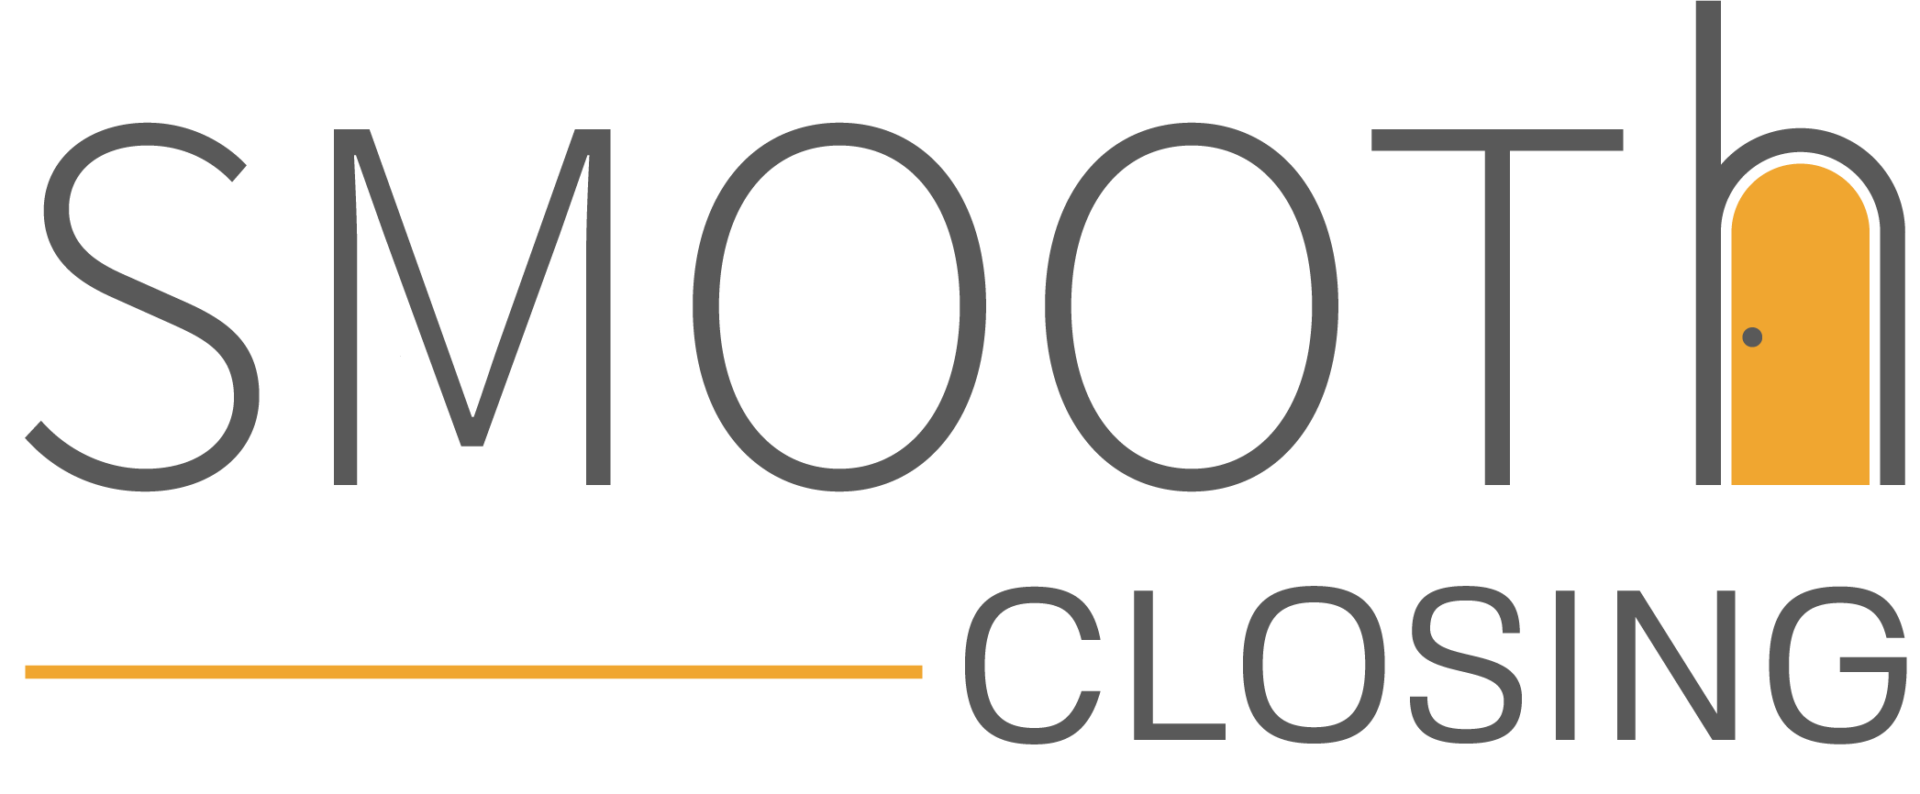 Smooth Closing logo